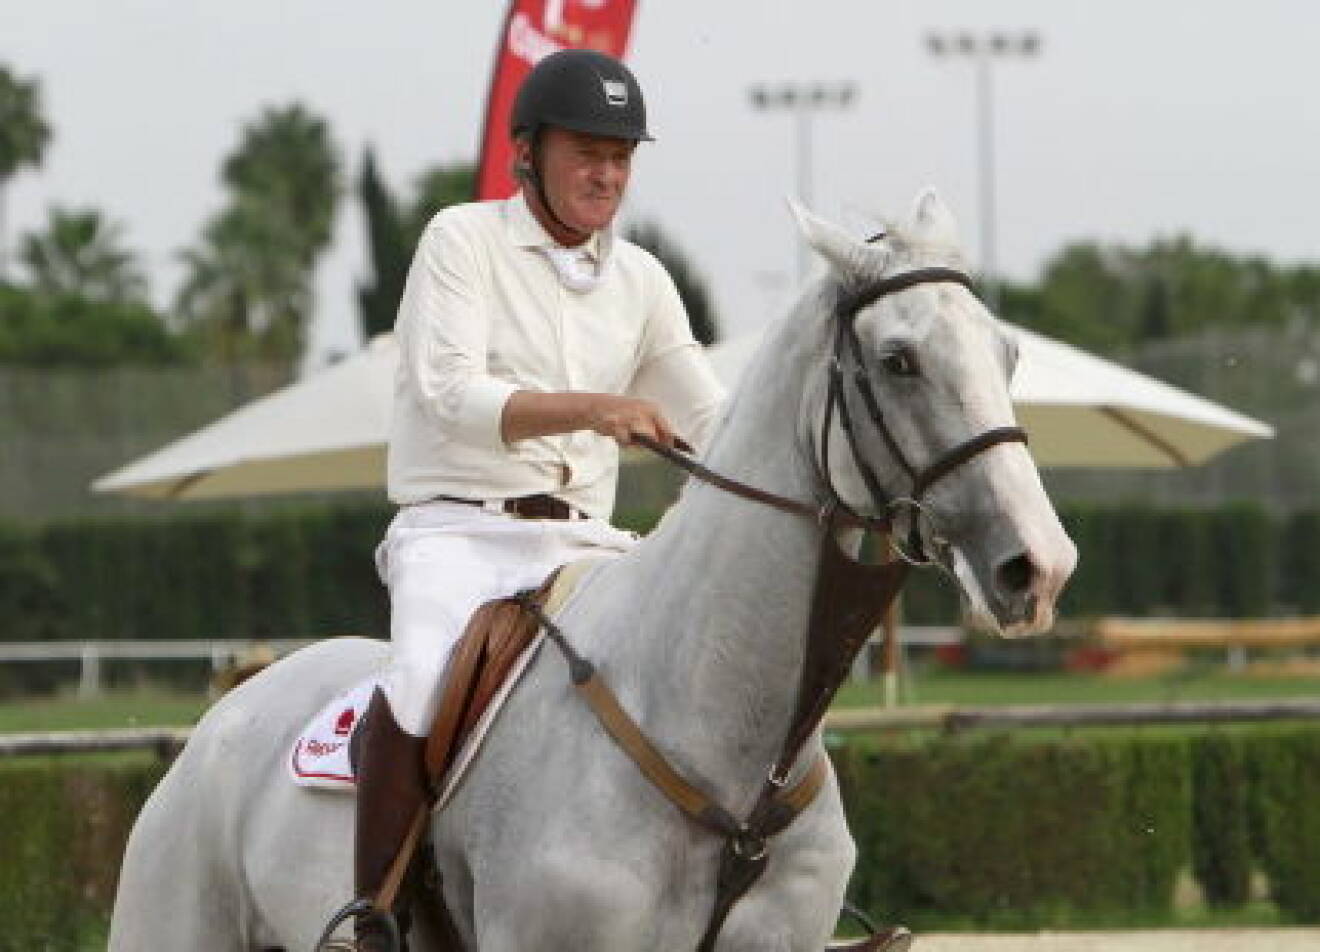 Princess Elena of Spain and Luis Astolfi took part in the II Ruta Via de la Plata horse riding competition in Seville